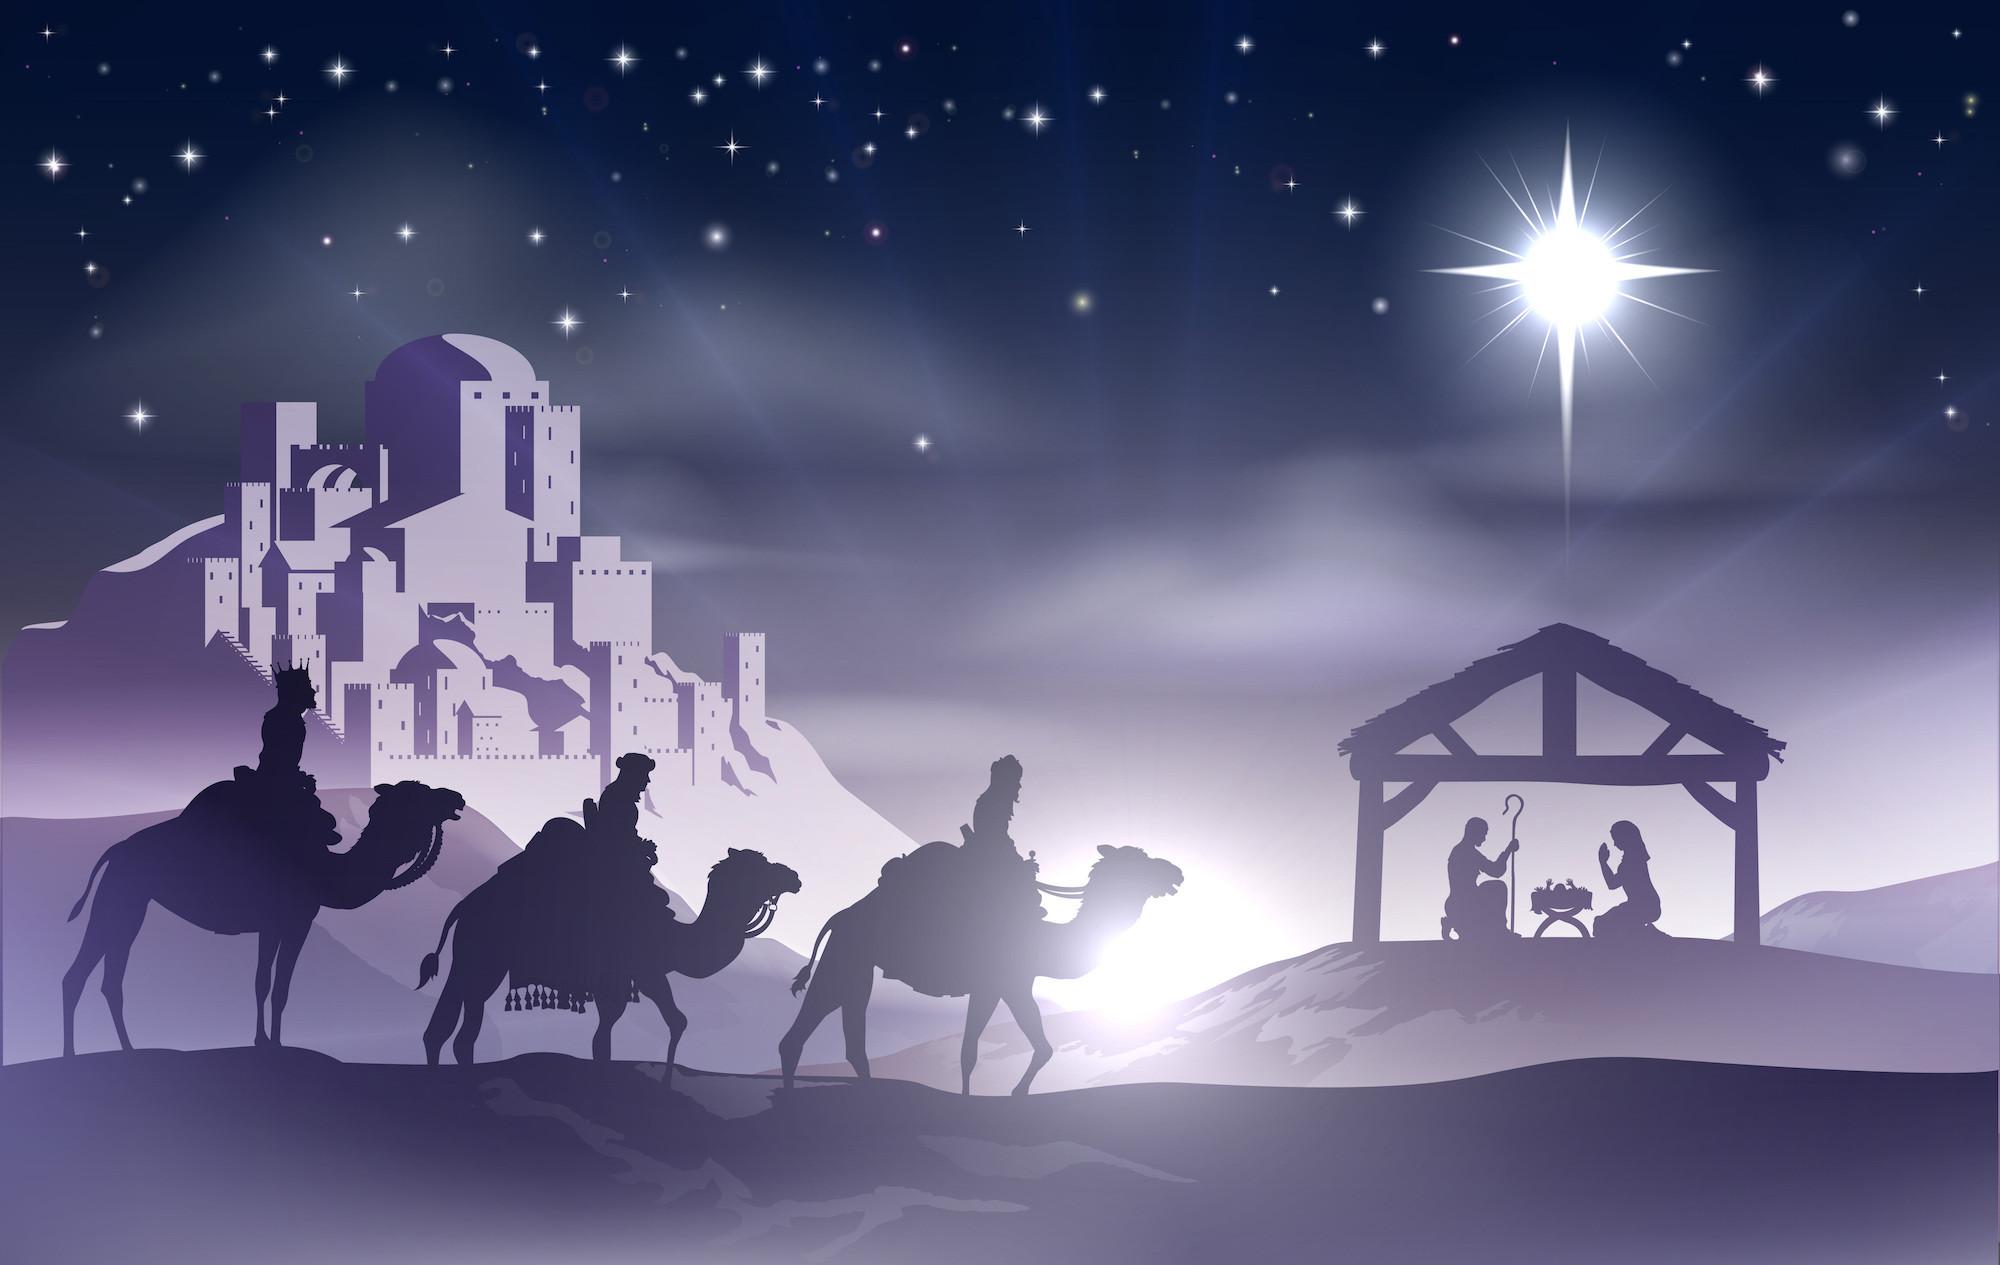 Christmas Nativity Background